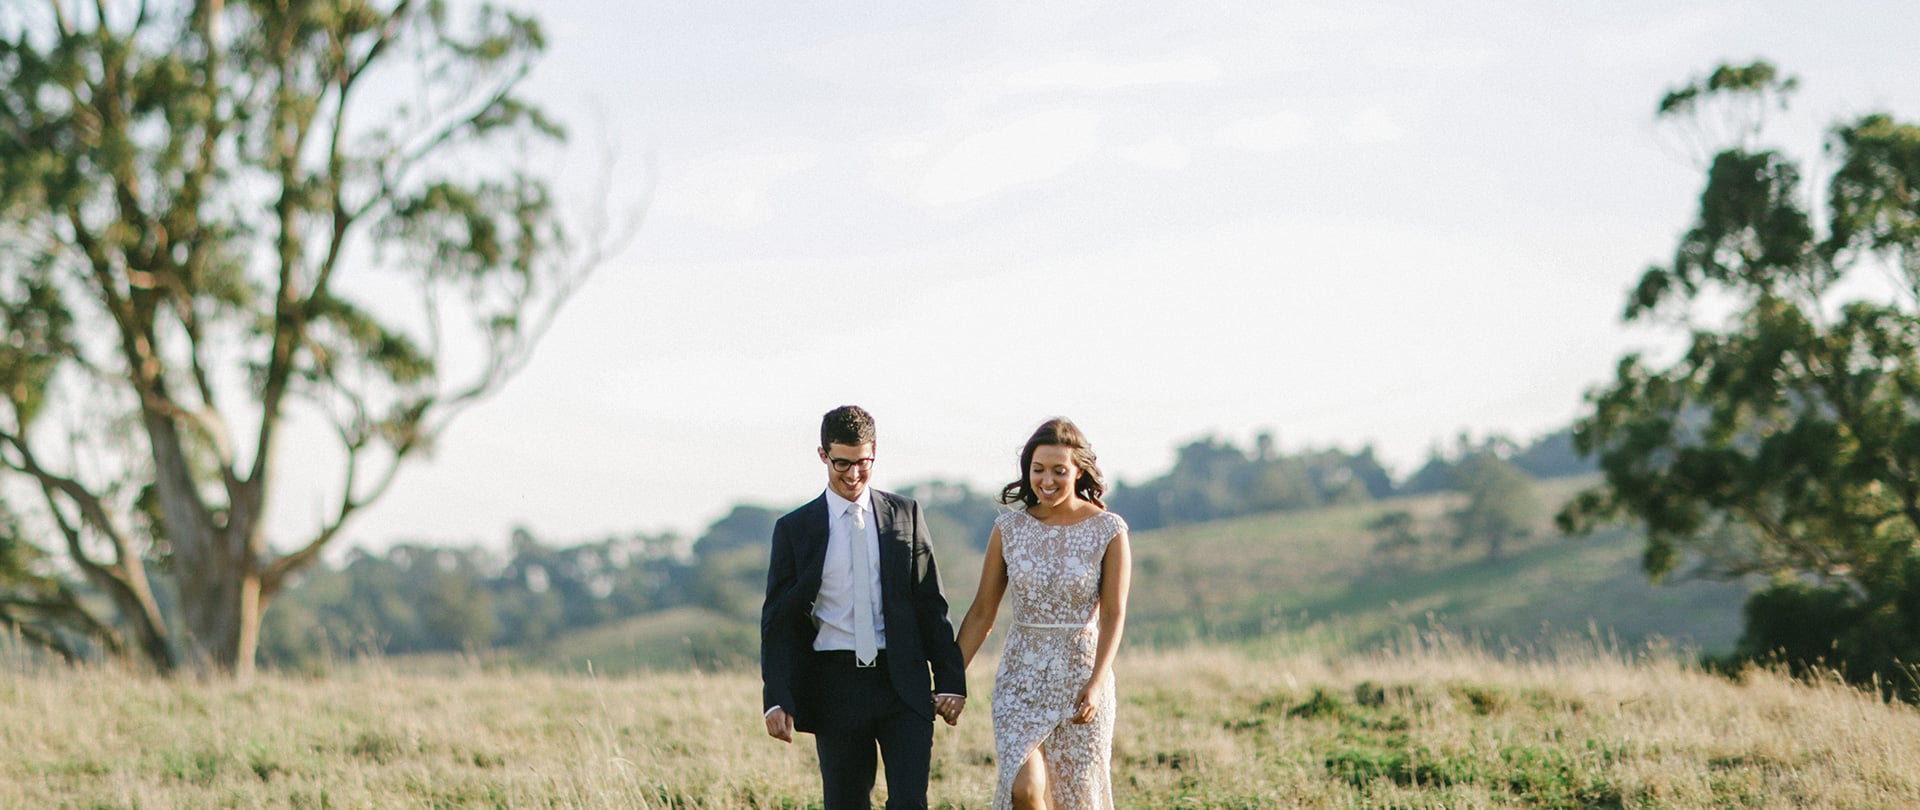 Rachel & Jeremy Wedding Video Filmed at Melbourne, Victoria